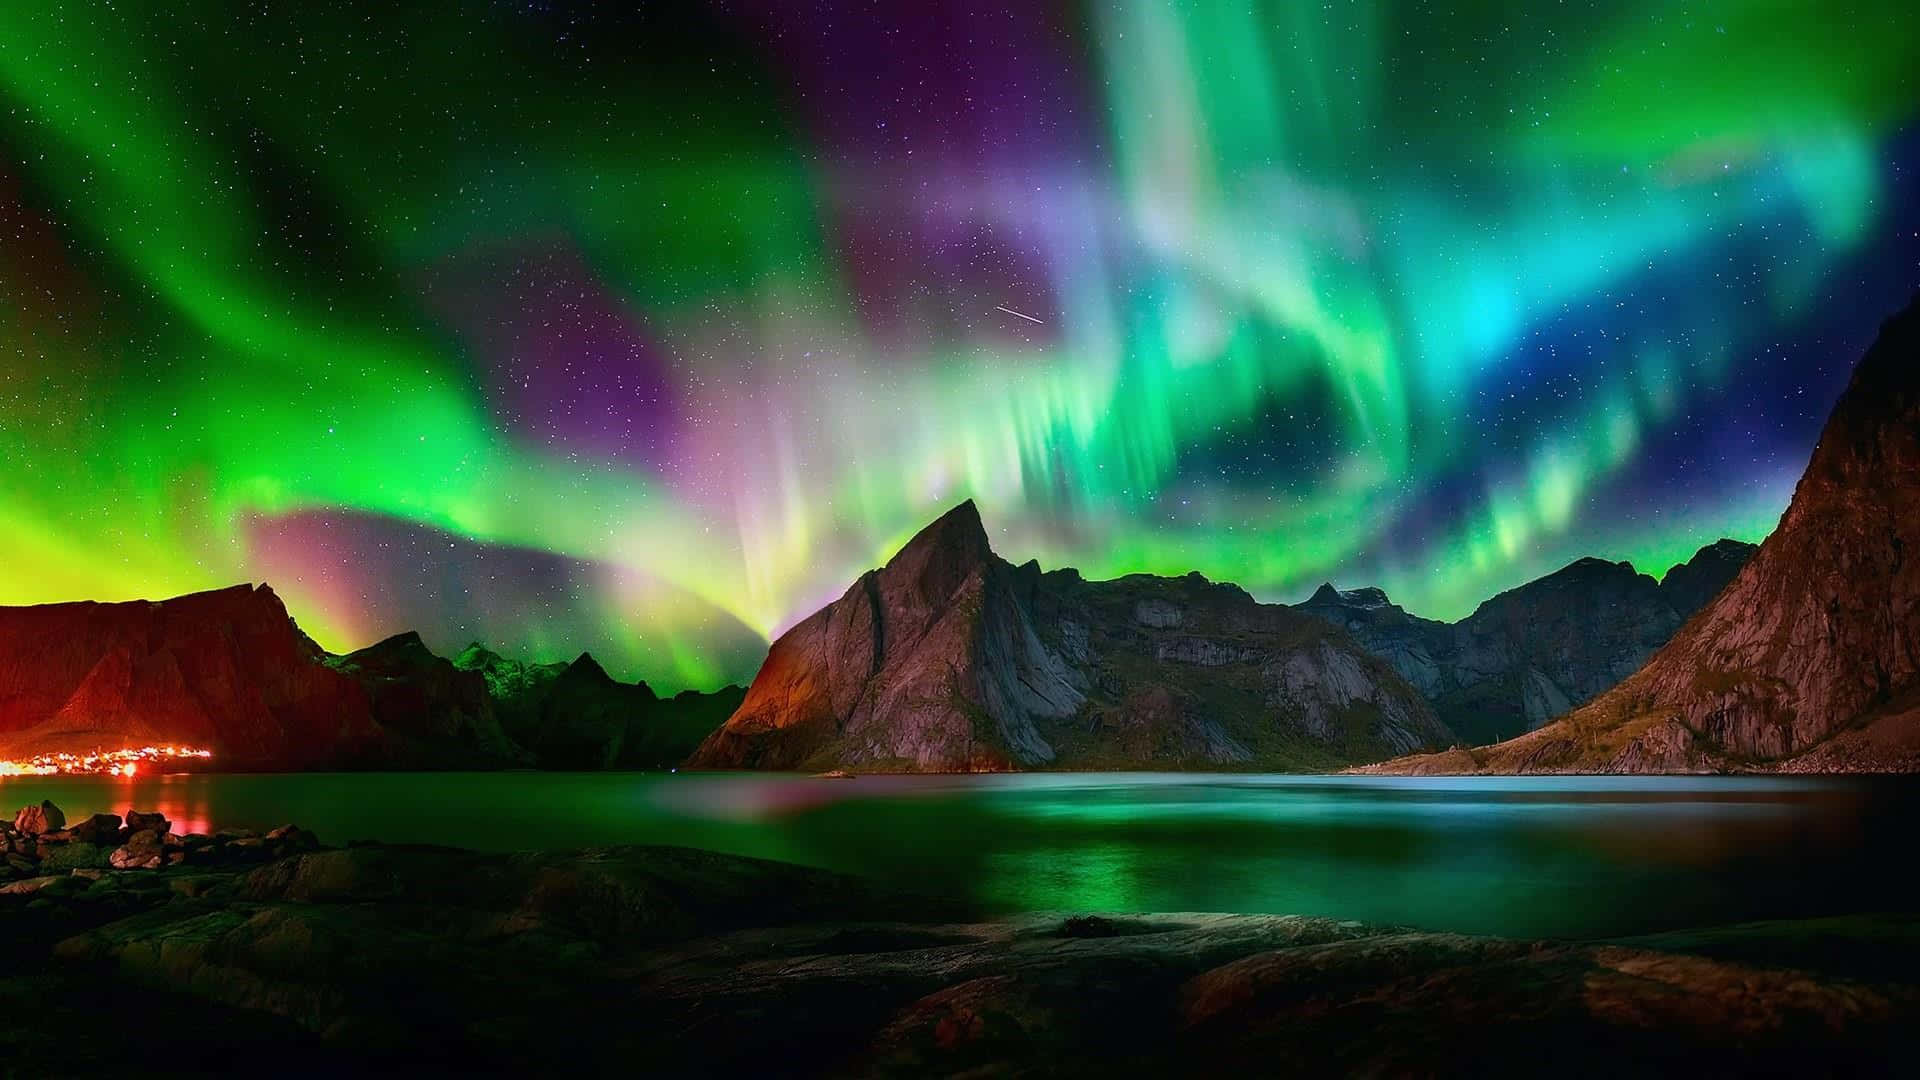 The Aurora Borealis ornates the night sky with mesmerizing light